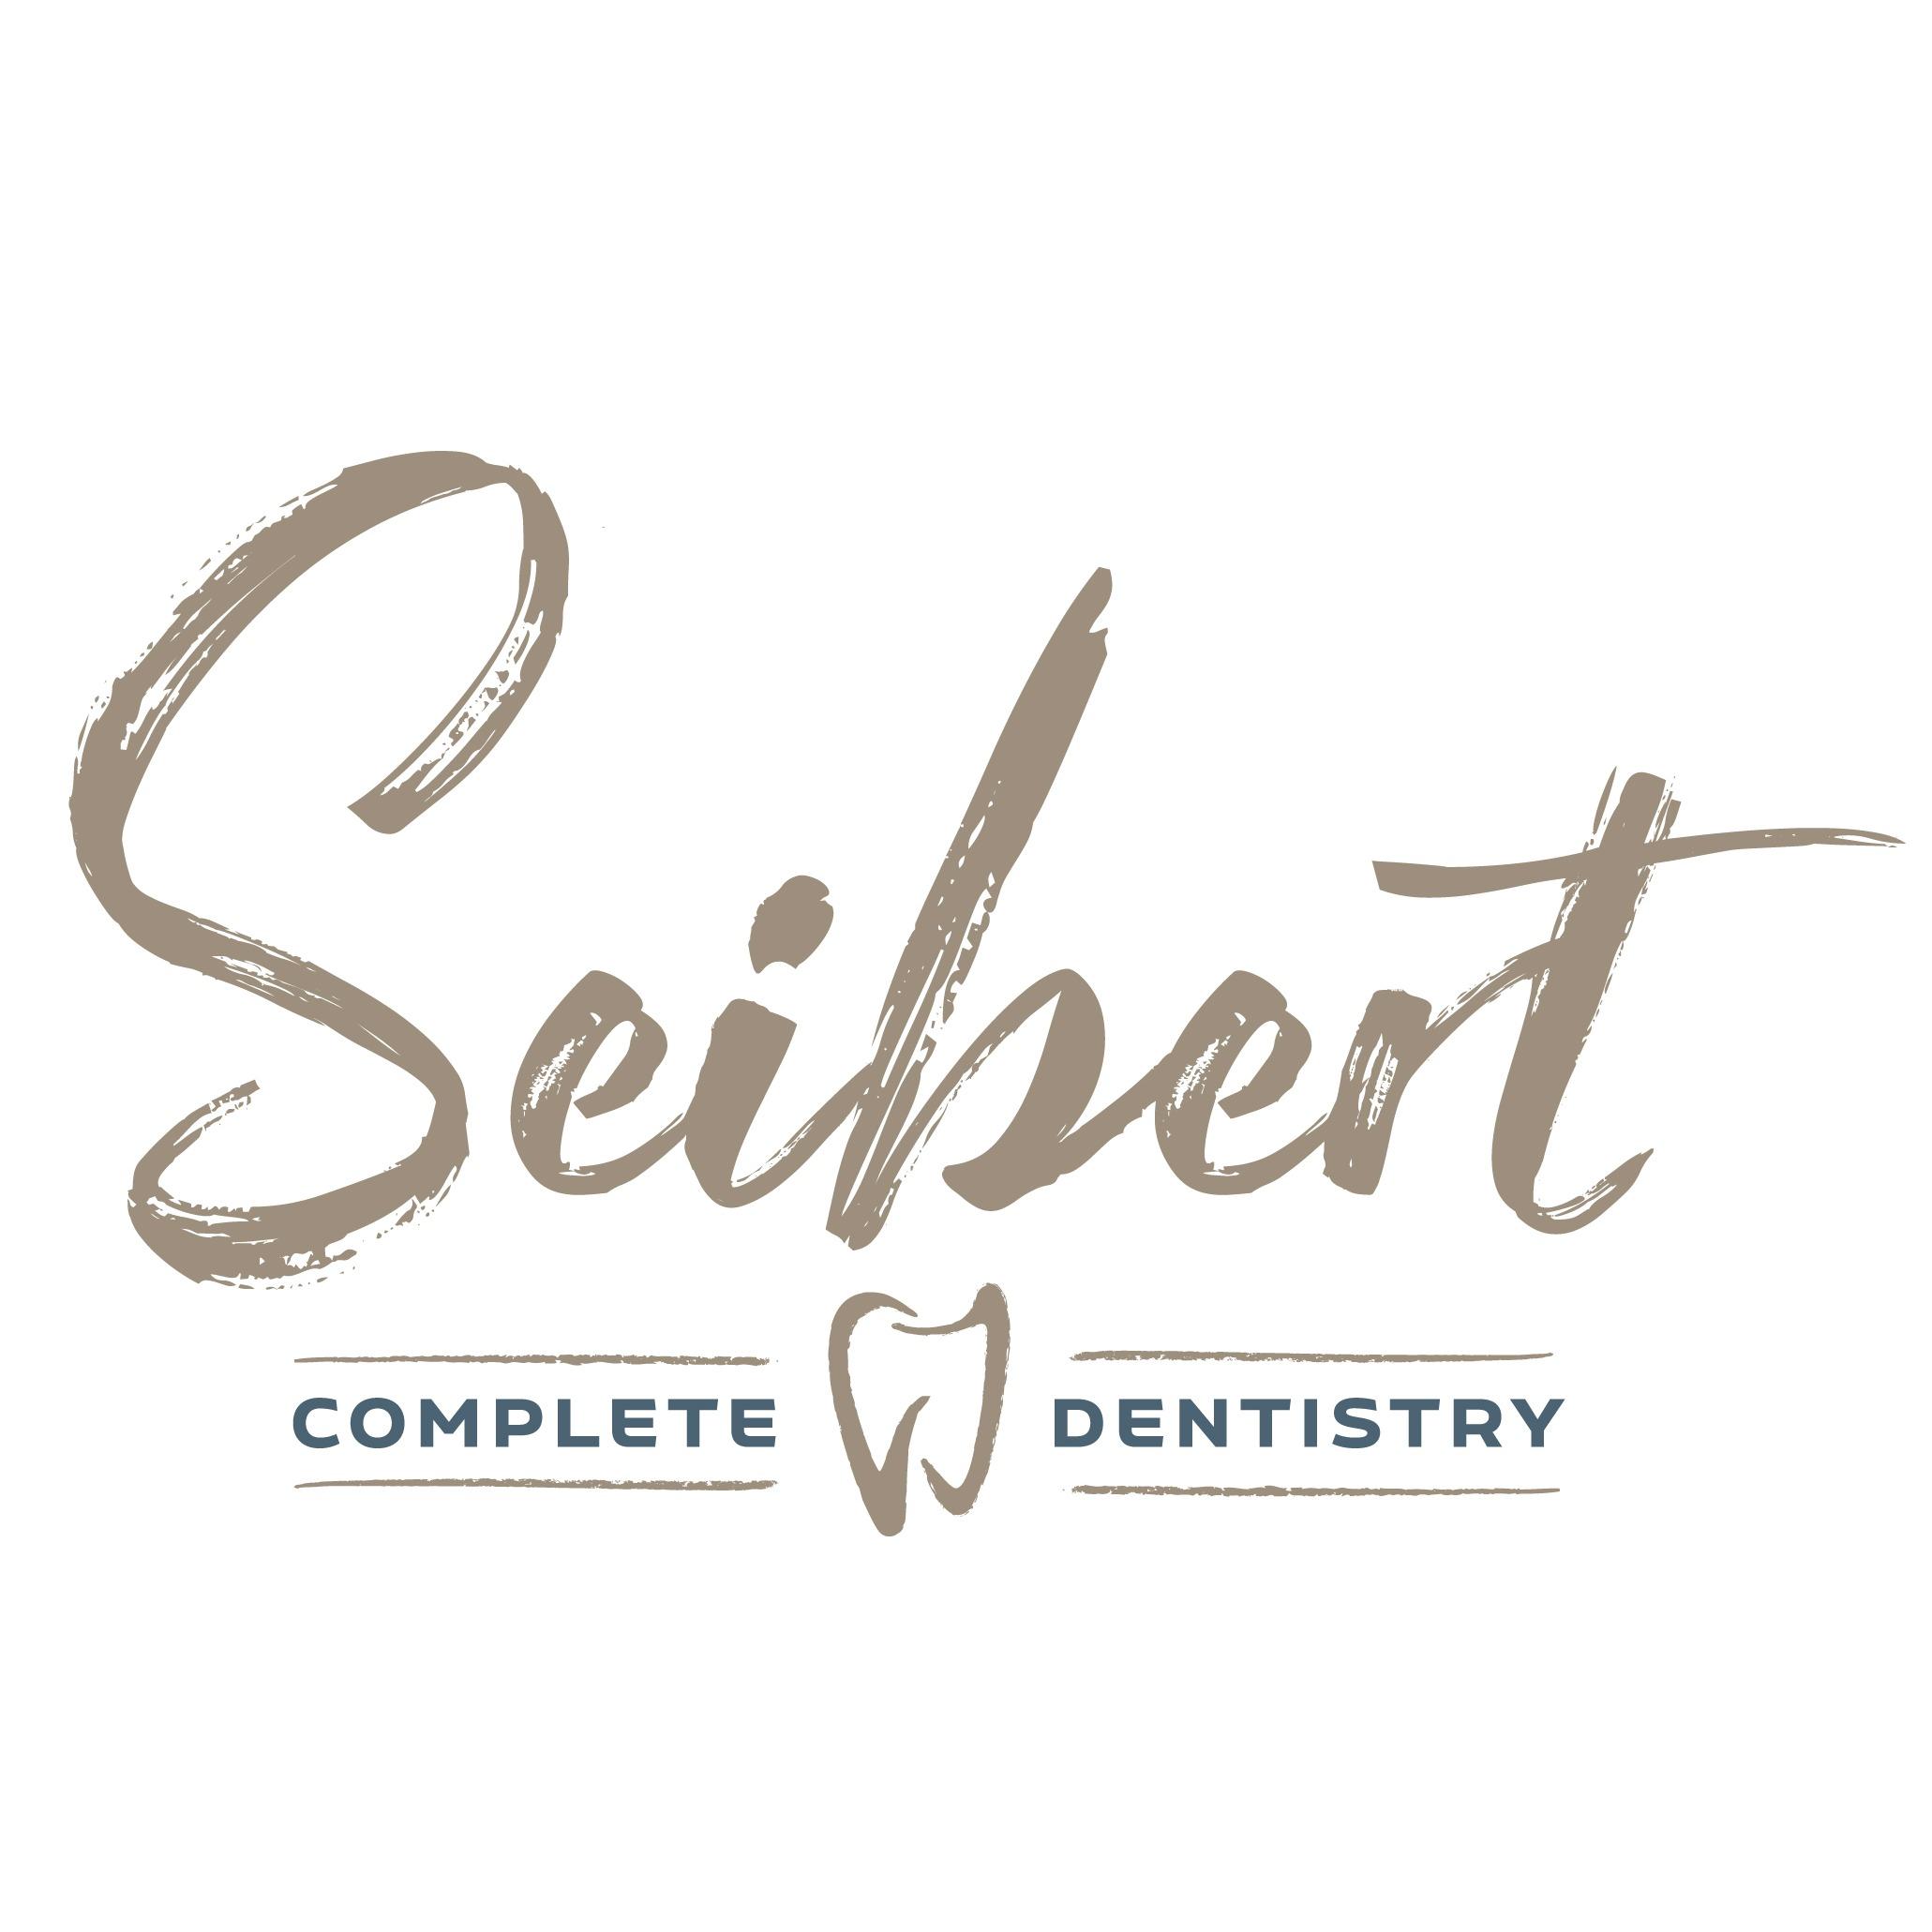 Seibert Complete Dentistry Cincinnati (513)231-9300